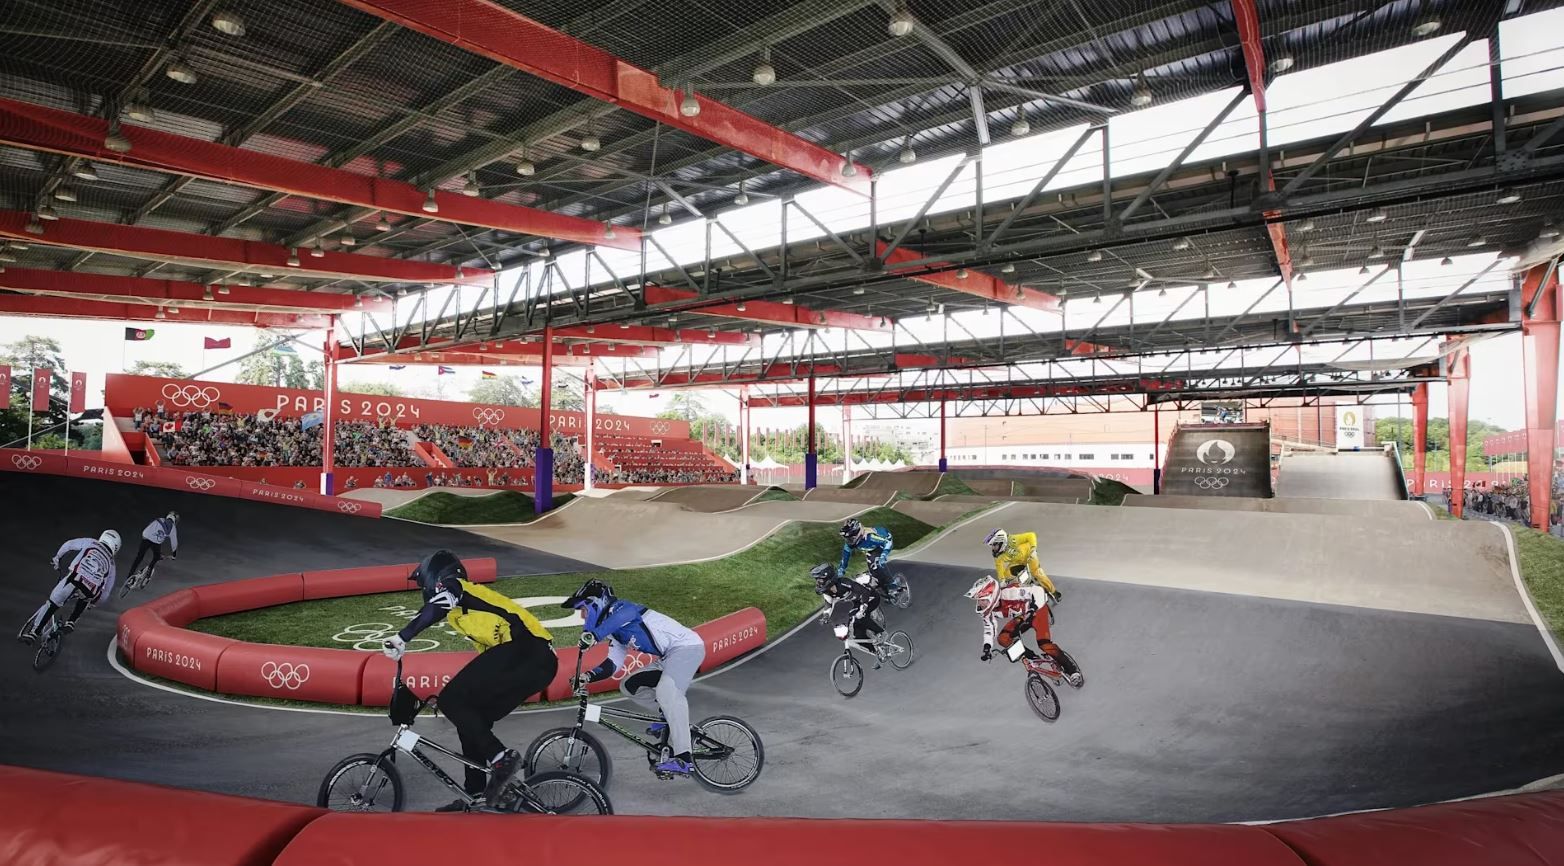 Things To Do at Saint-Quentin-en-Yvelines BMX Stadium Paris Olympics 2024 | Top Attractions, Night Life, Restaurants